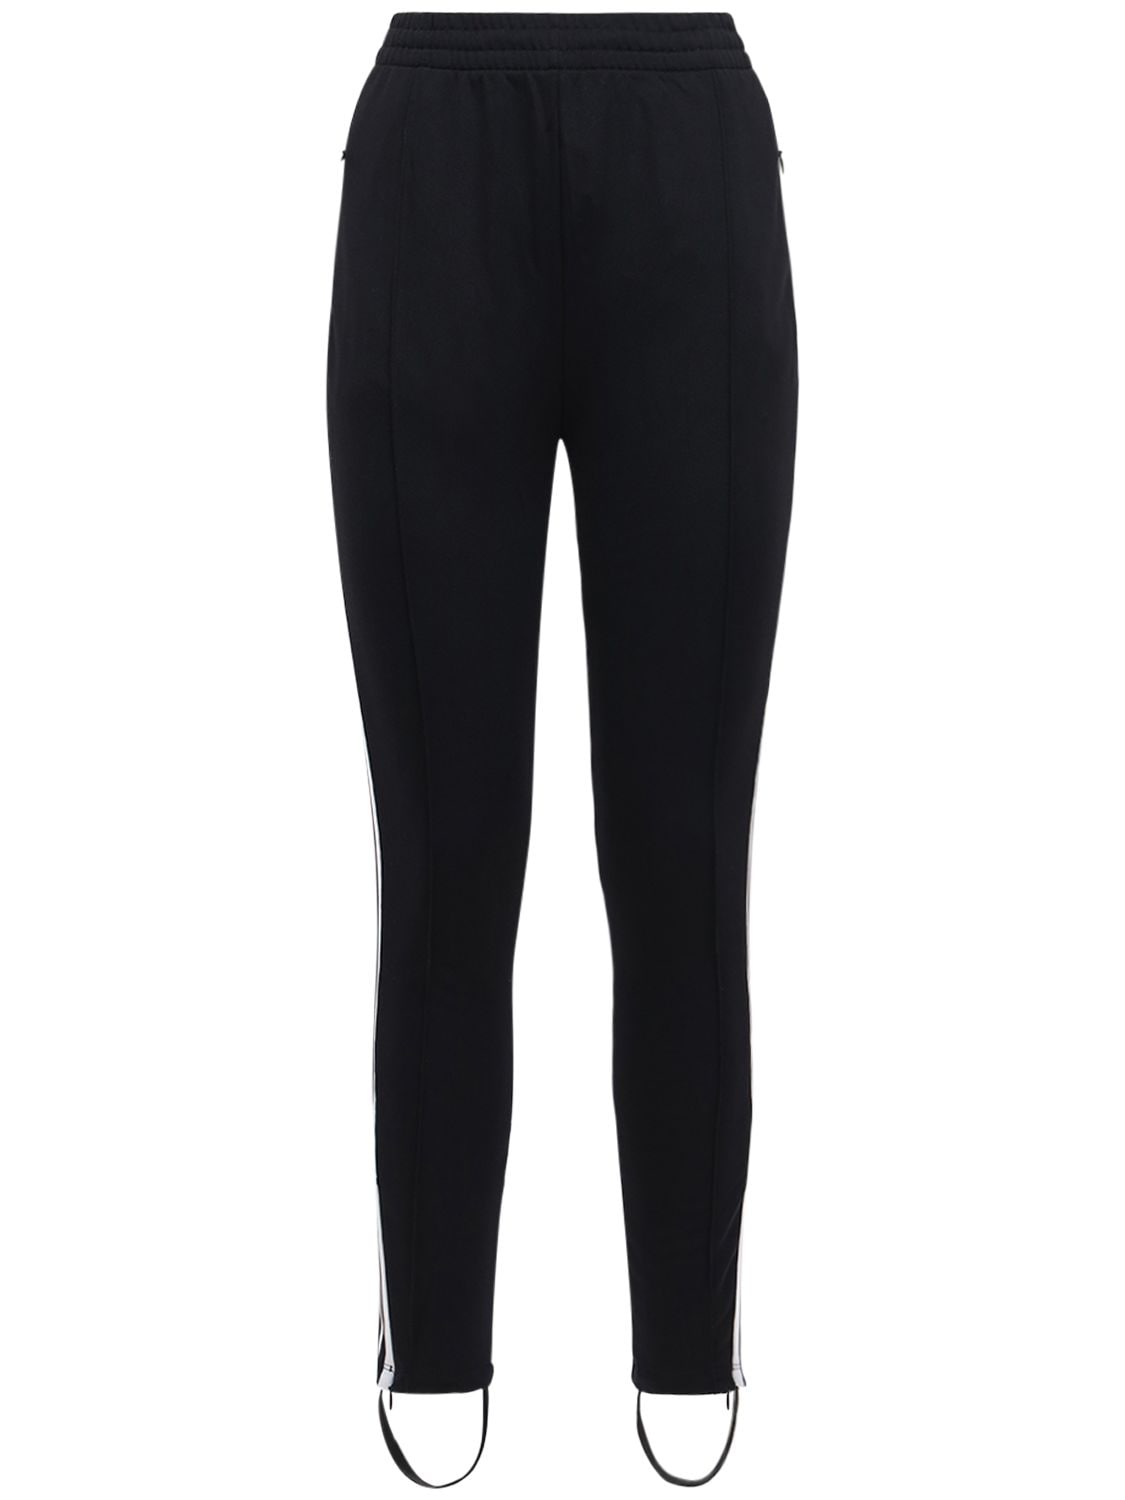 Adidas Originals - 70s stirrup cotton blend pants - Black | Luisaviaroma